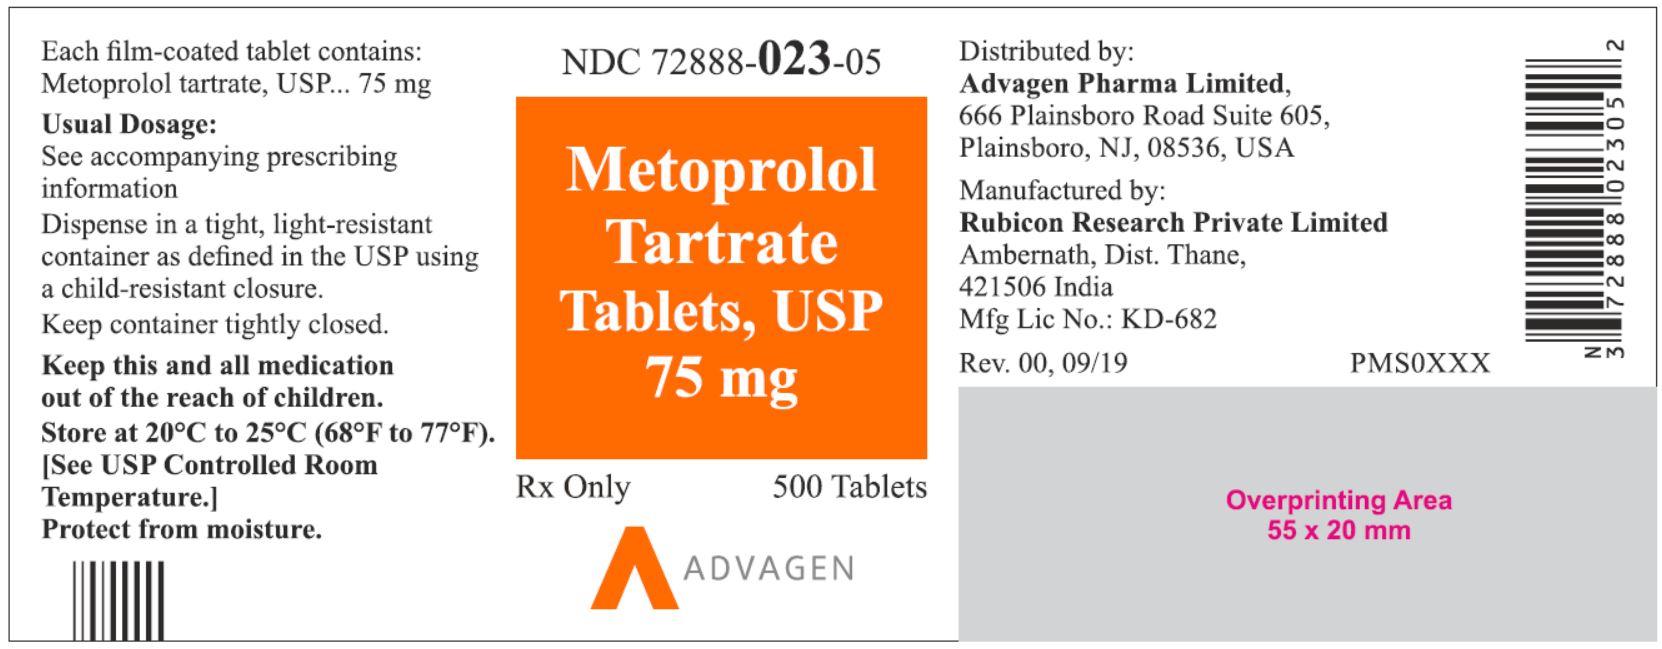 NDC 72888-023-05 - Metoprolol Tartrate Tablets, USP 75 mg - 500 Tablets